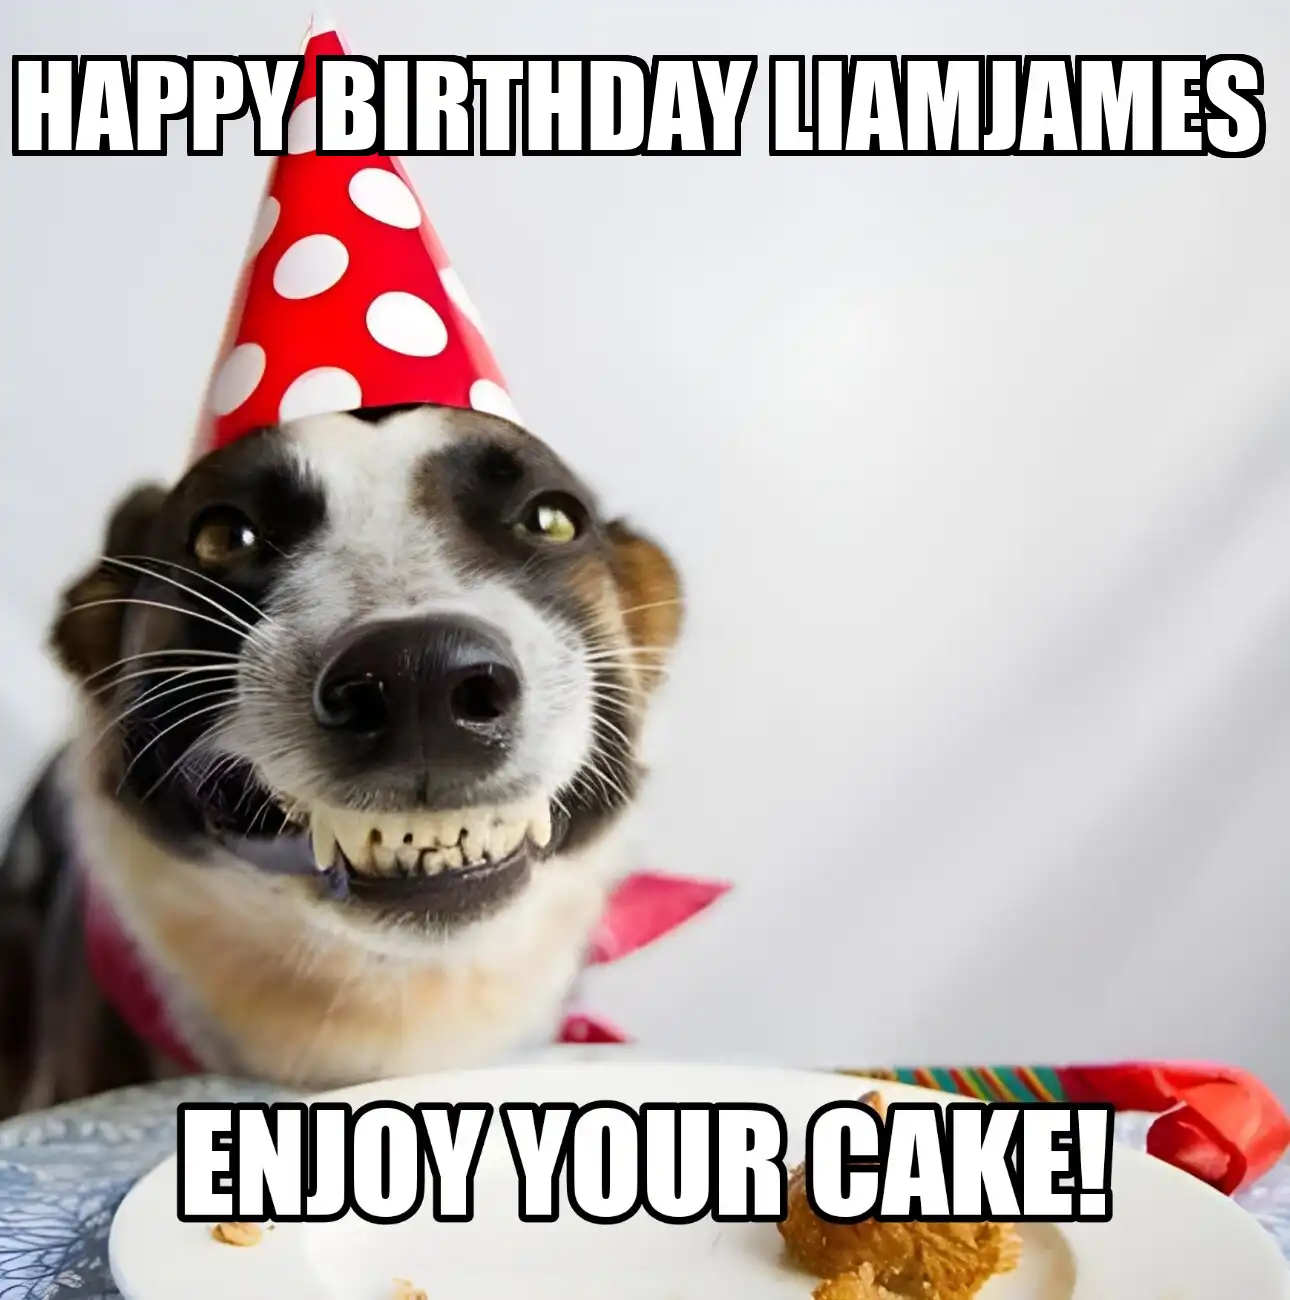 Happy Birthday Liamjames Enjoy Your Cake Dog Meme